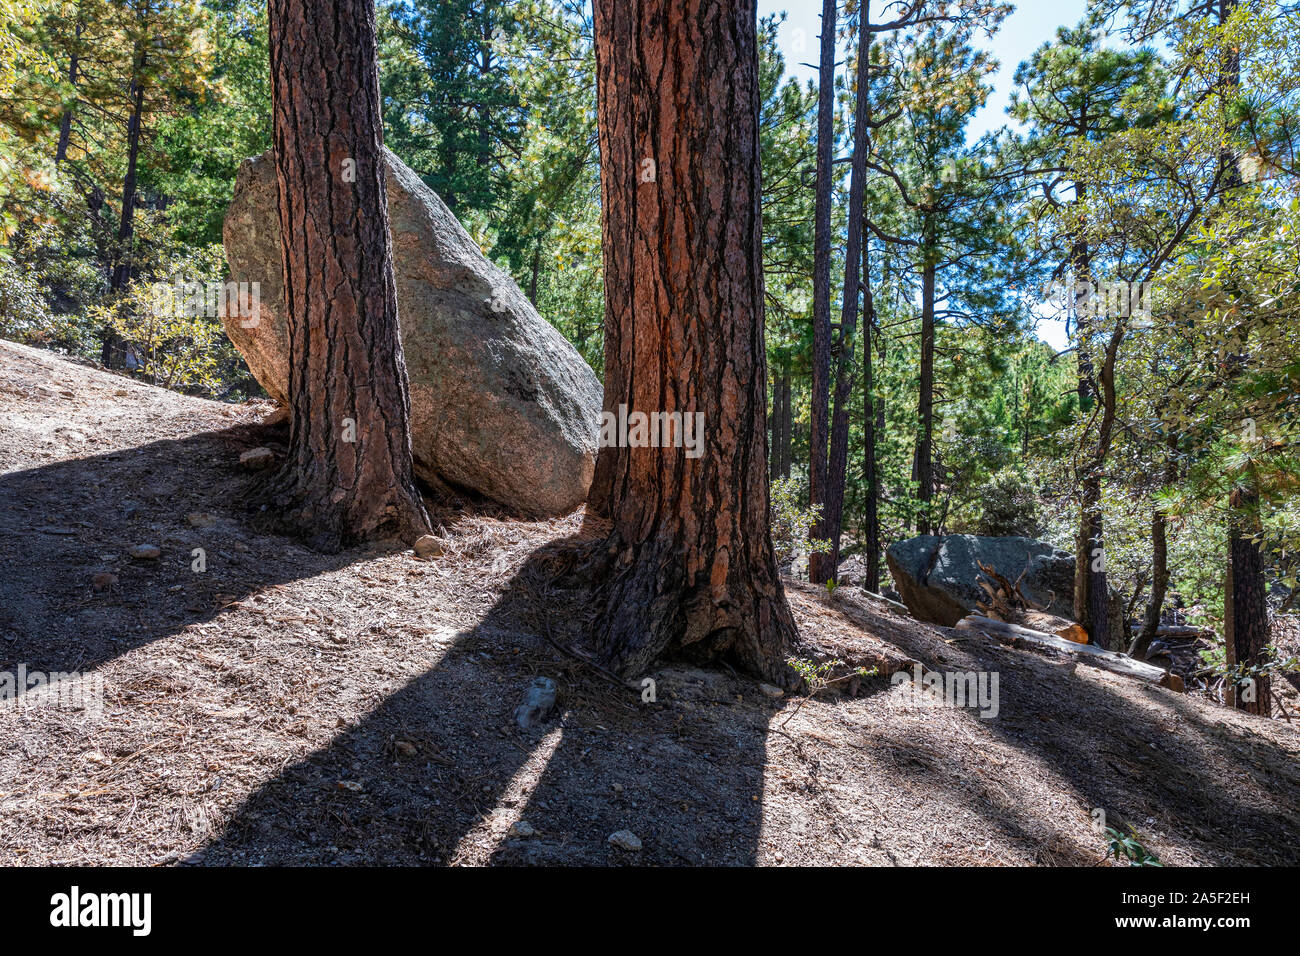 Ponderosa pine trees against a sunny blue sky, Mt. Lemmon, Catalina Mountains, Tucson, Arizona Stock Photo